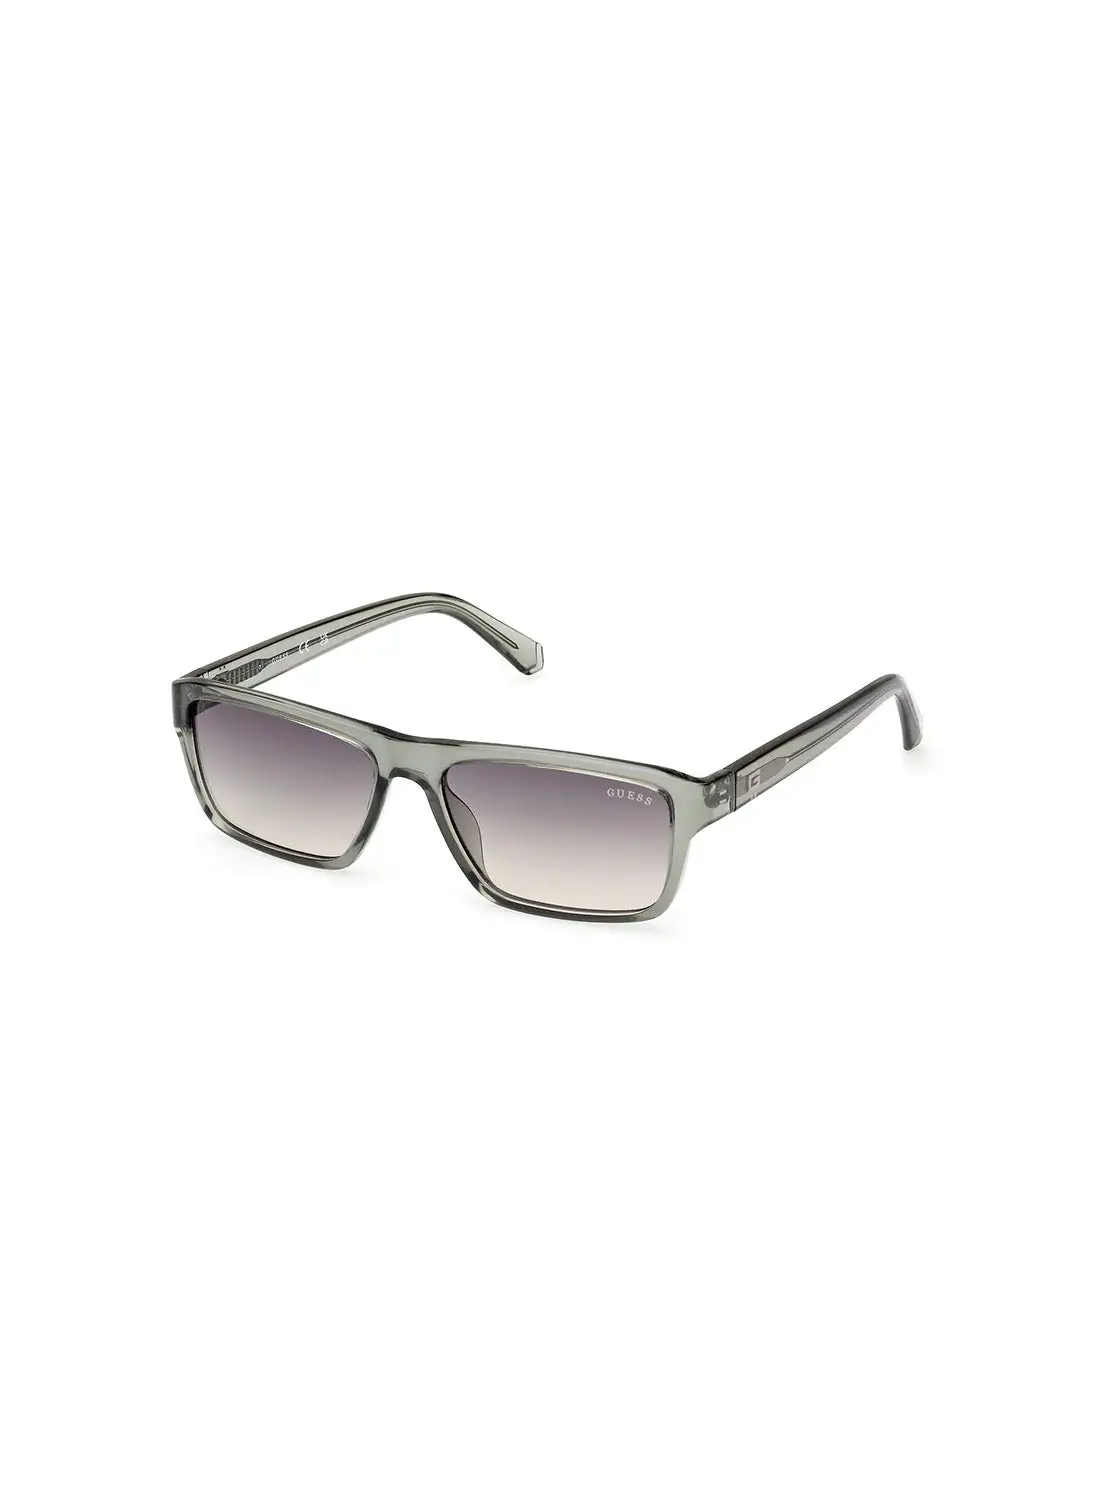 GUESS Men's UV Protection Rectangular Sunglasses - GU0008593P55 - Lens Size: 55 Mm